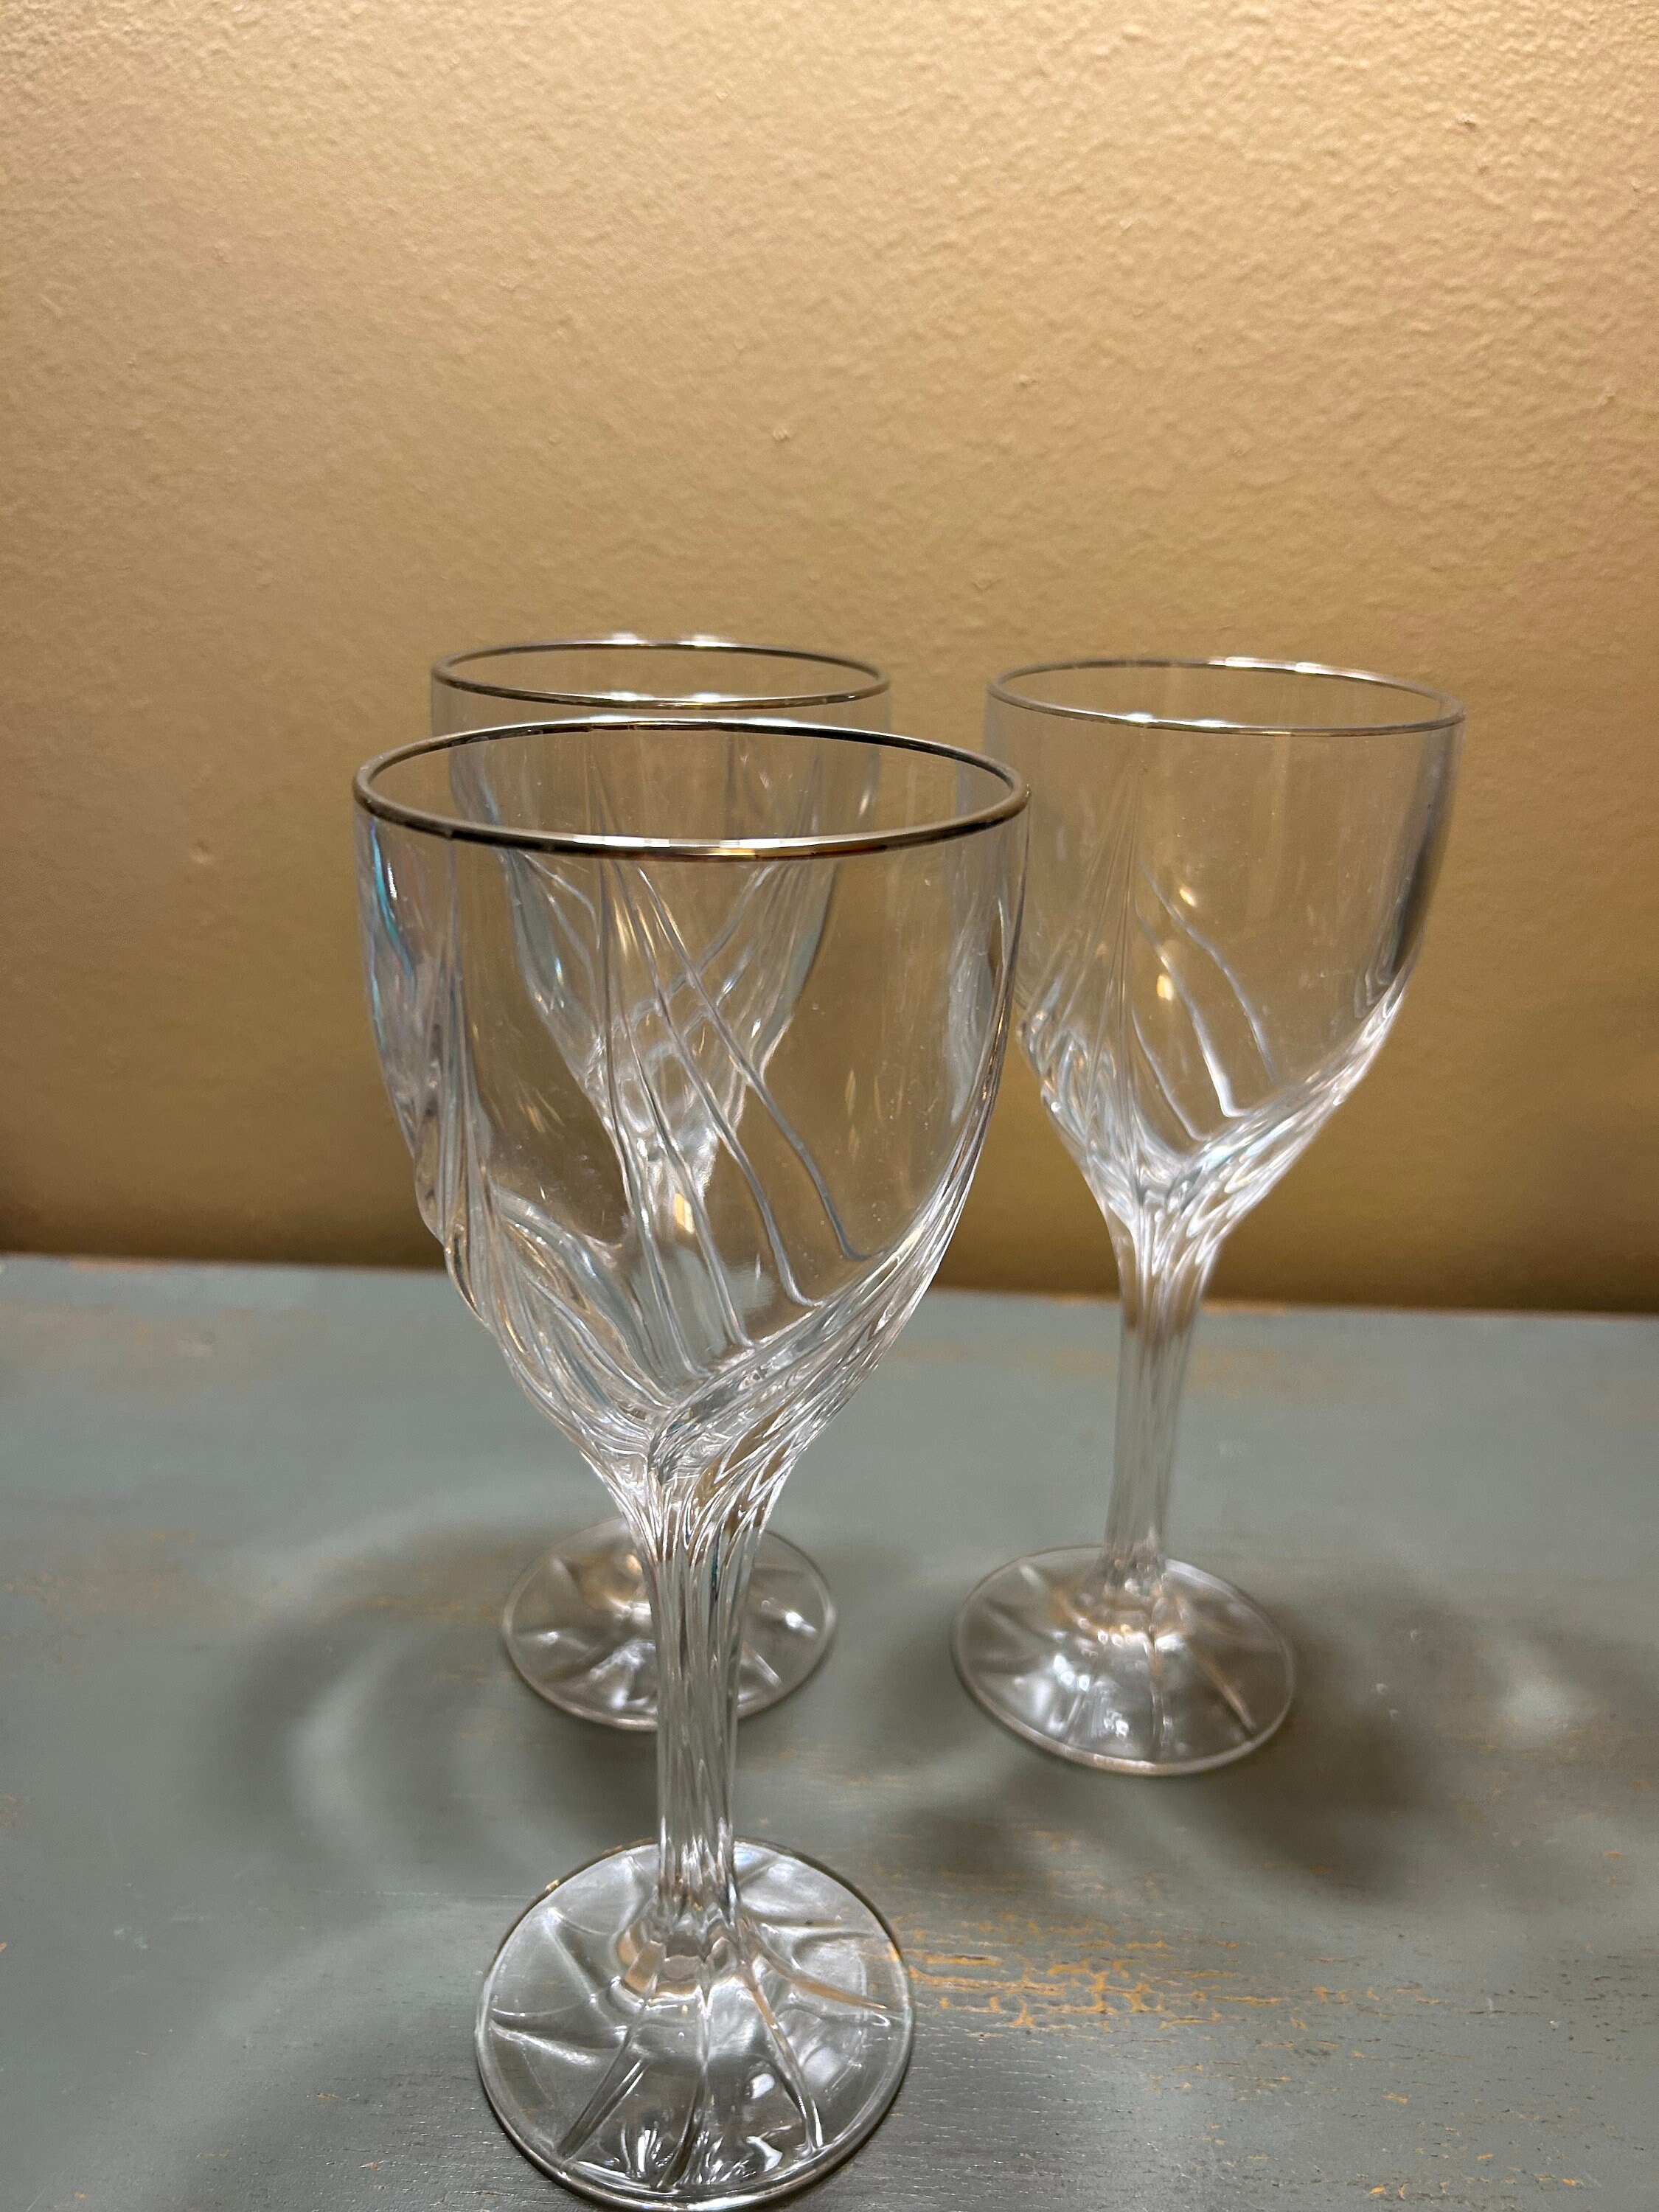 Set of 4 Vintage Lenox Crystal Debut Wine Glasses